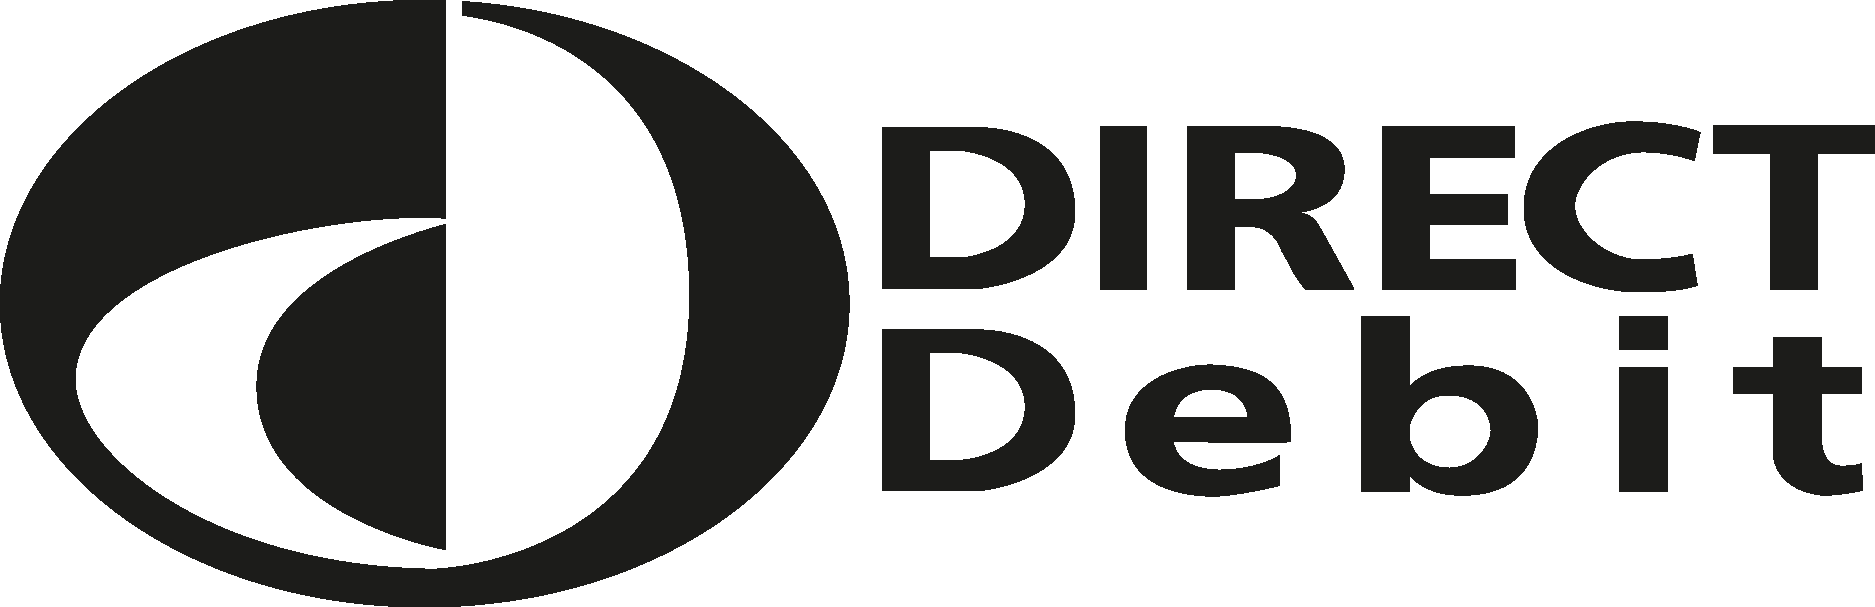 Download Direct Logo